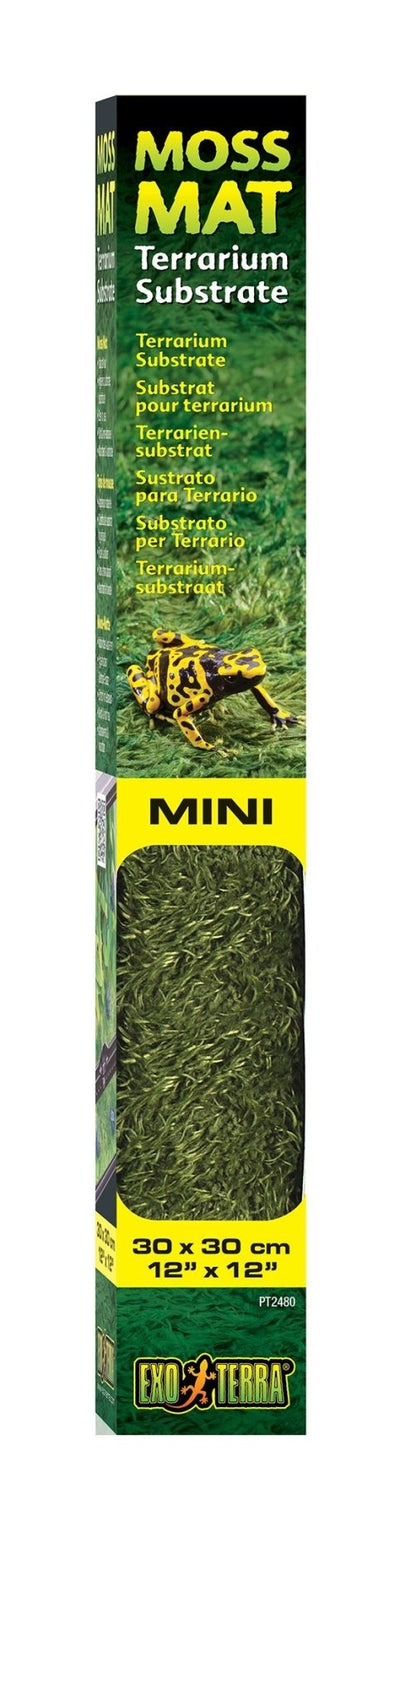 Exo Terra Forest Moss Mat Mini 30cm x 30cm - Woonona Petfood & Produce